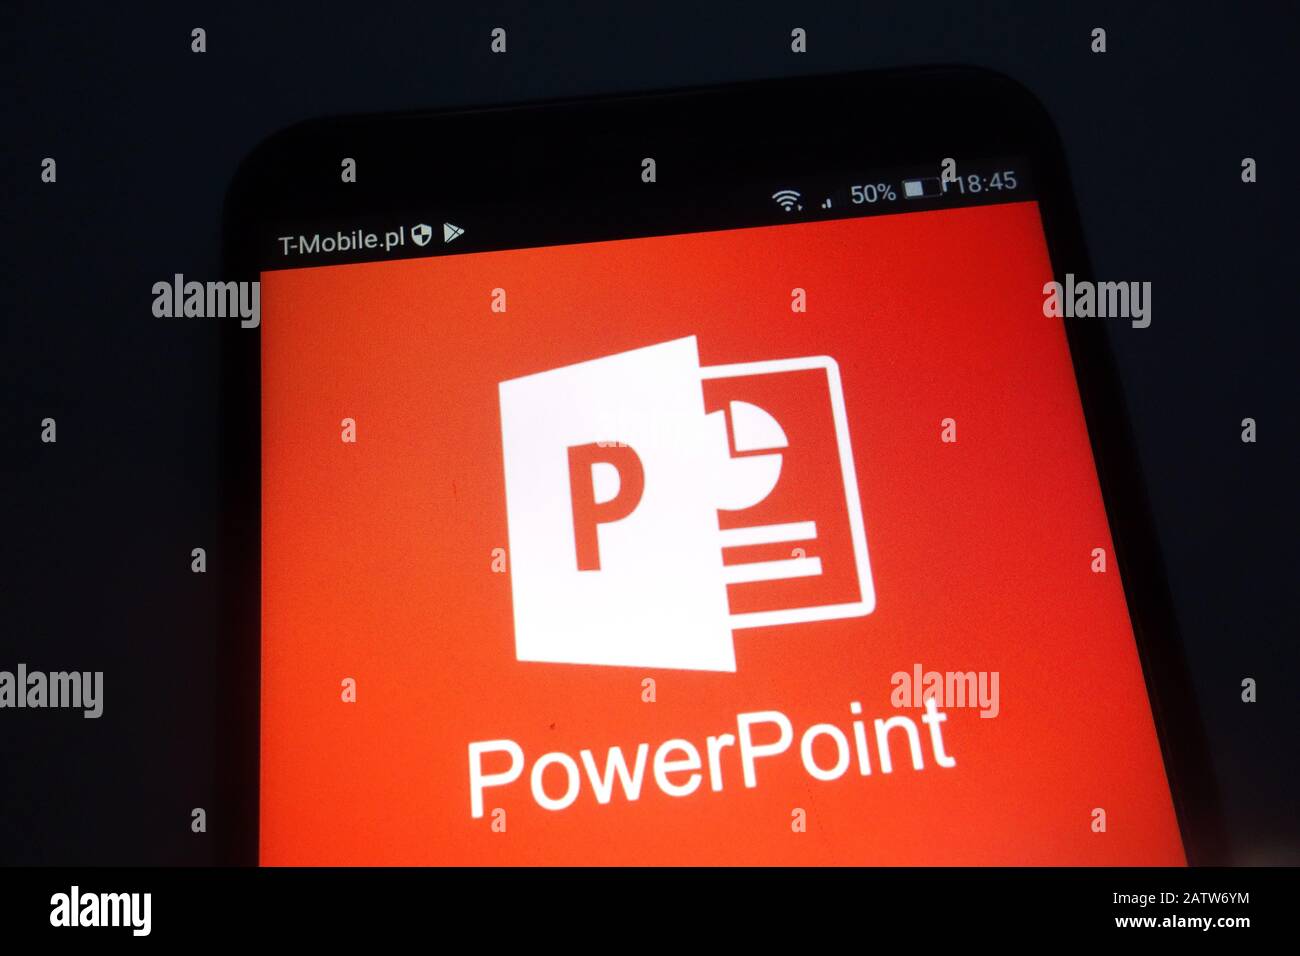 Microsoft PowerPoint logo on smartphone Stock Photo